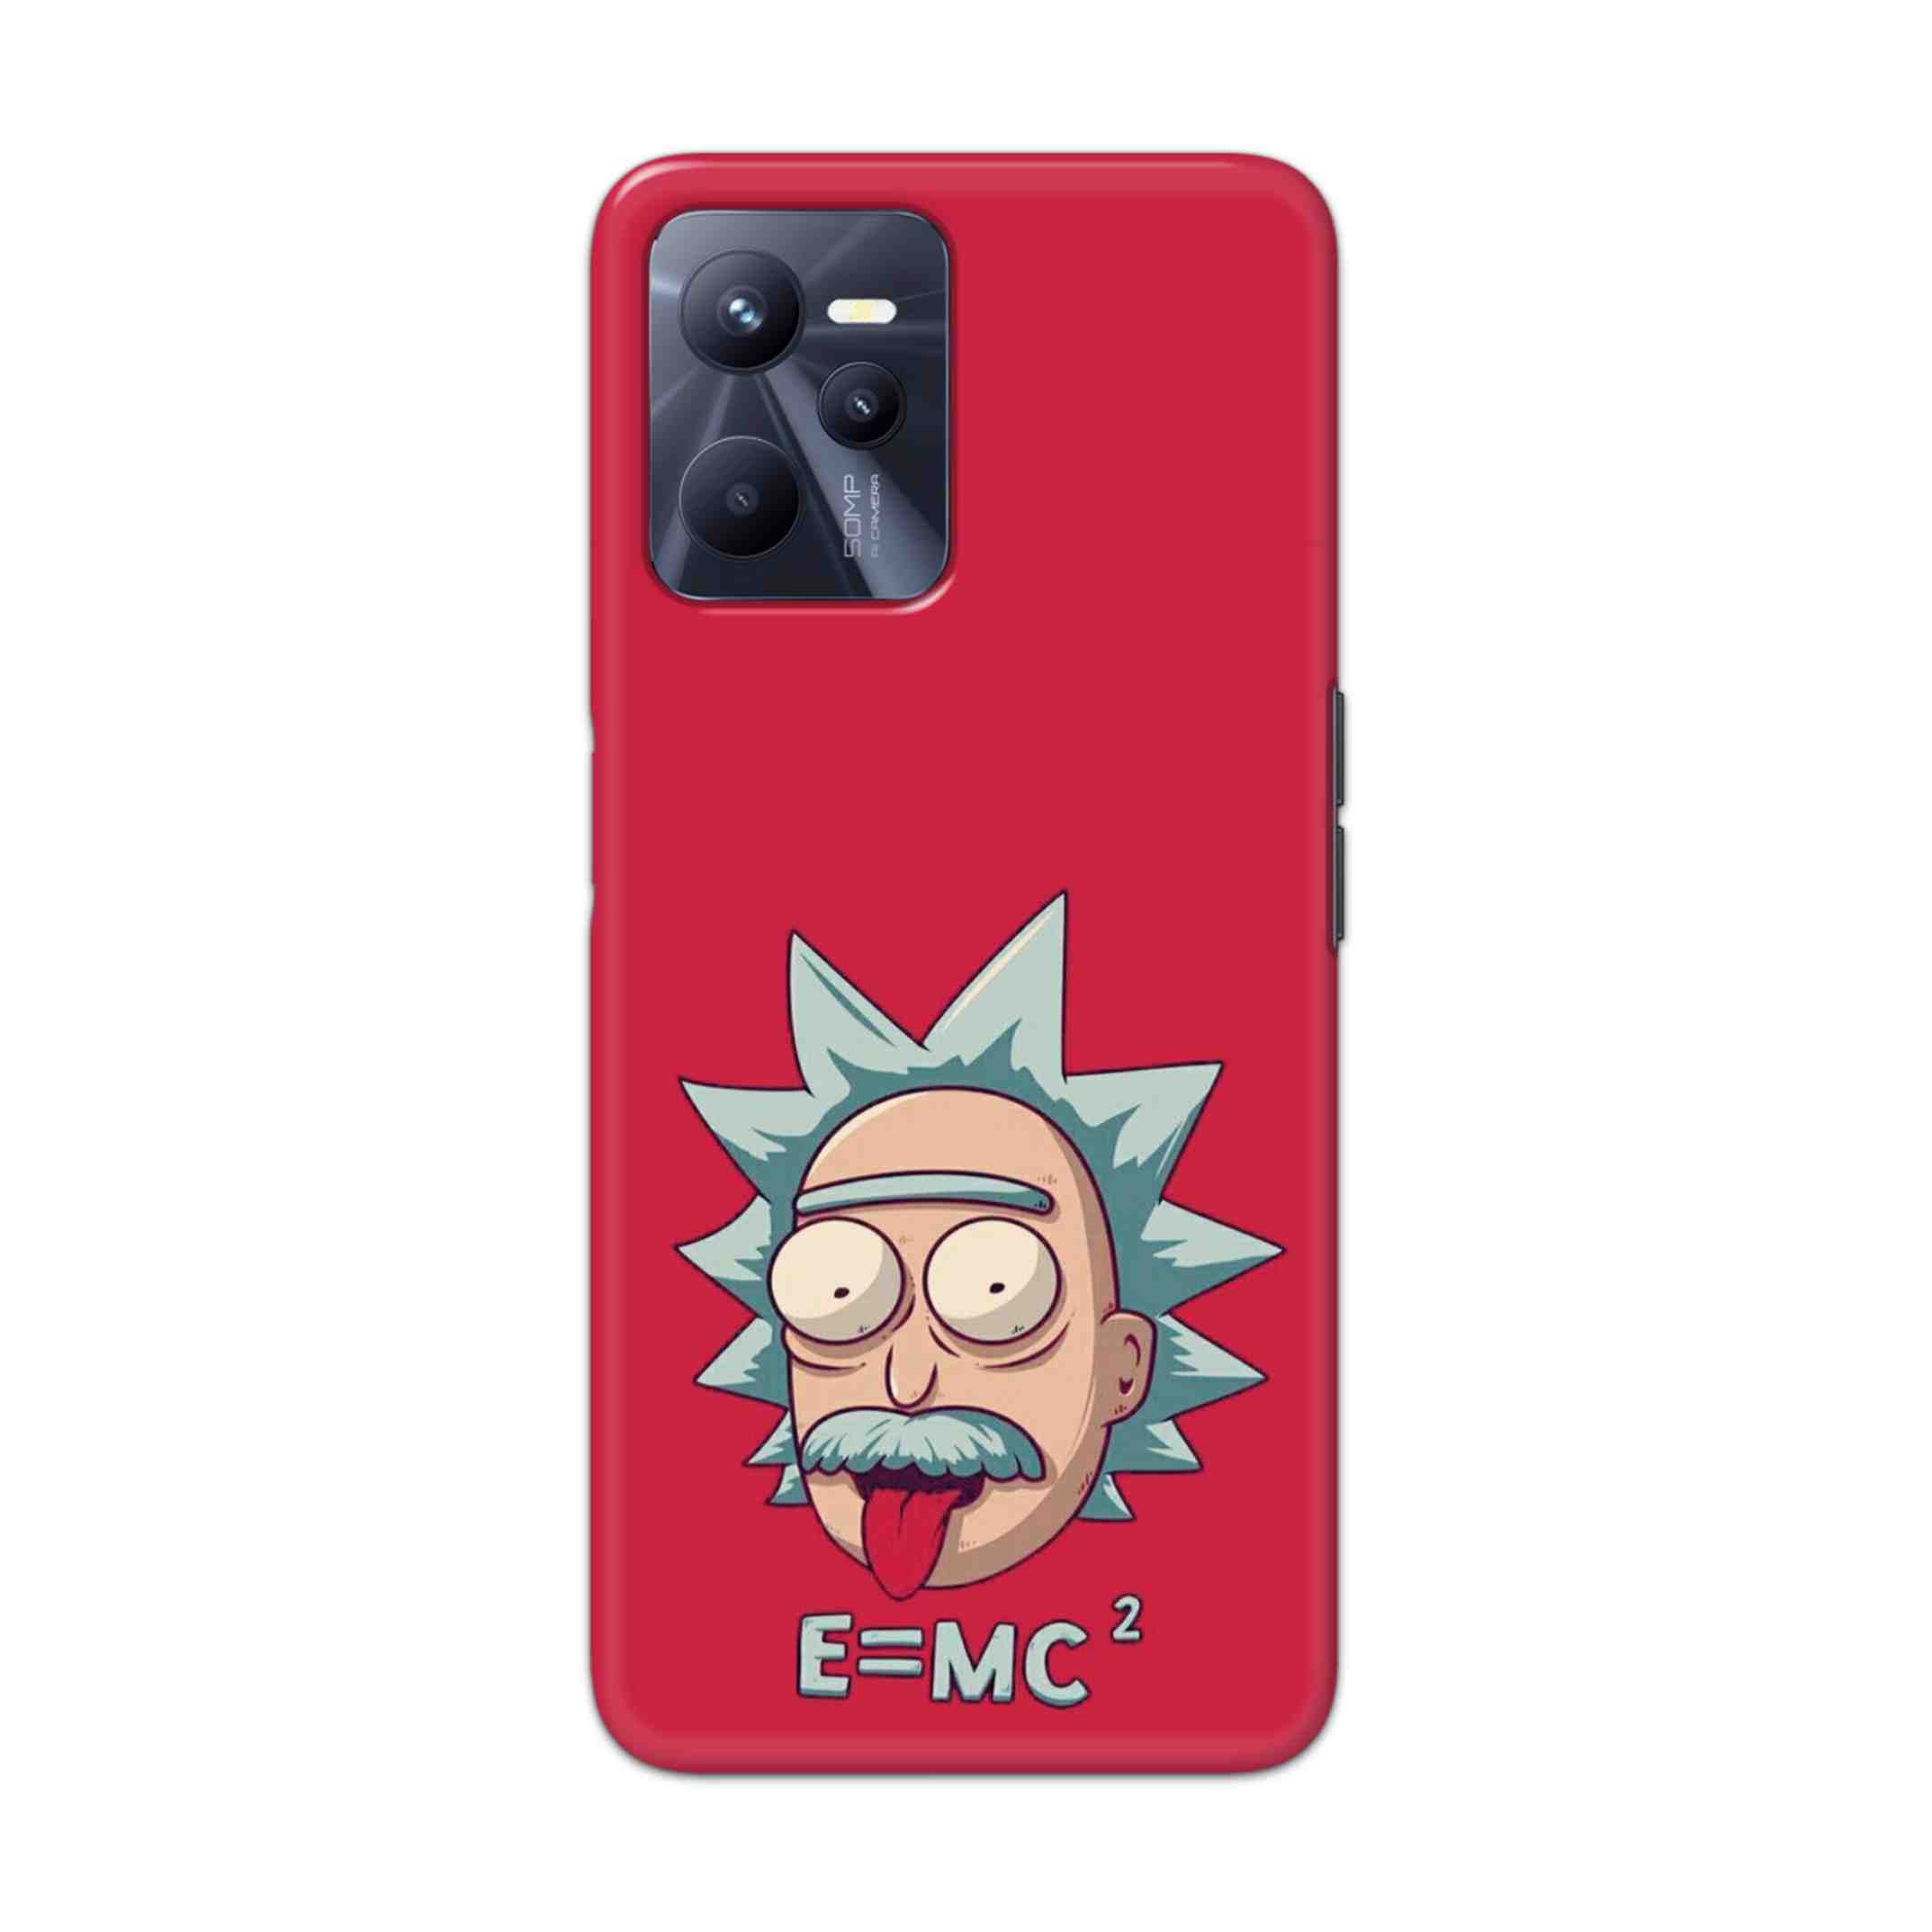 Buy E=Mc Hard Back Mobile Phone Case Cover For Realme C35 Online